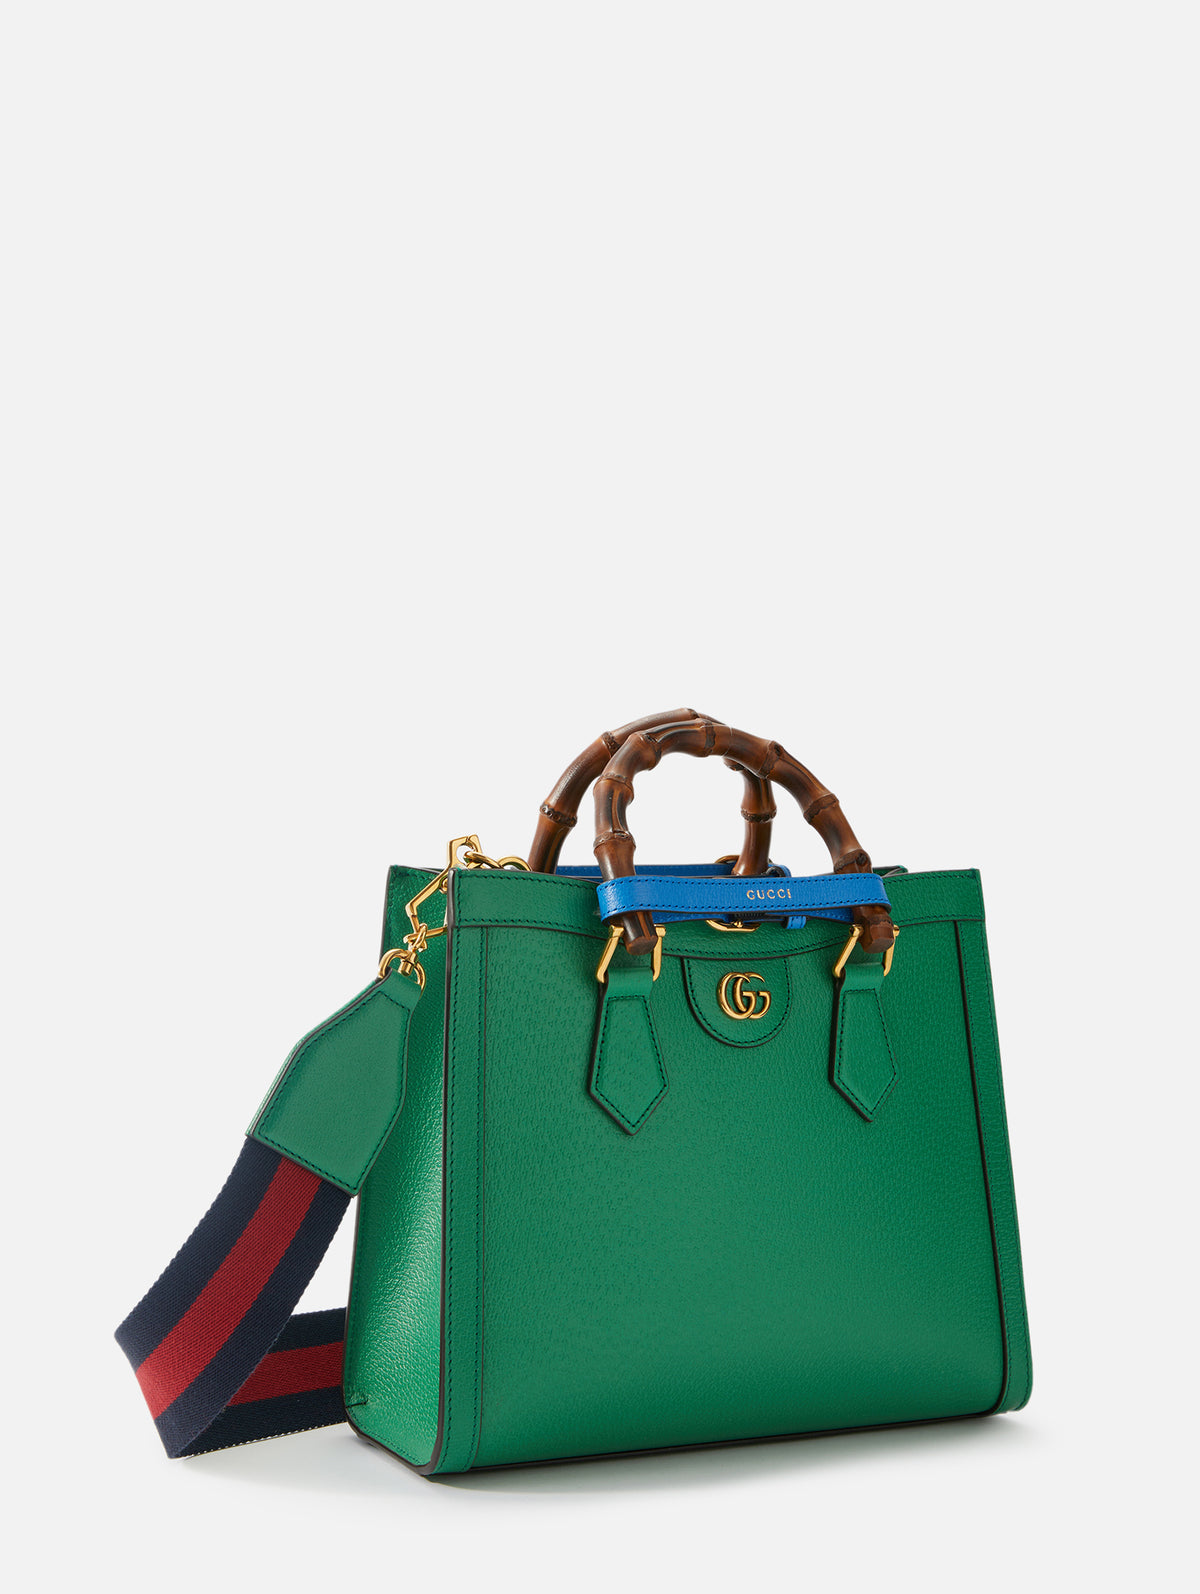 Gucci Diana small tote bag in dark green leather